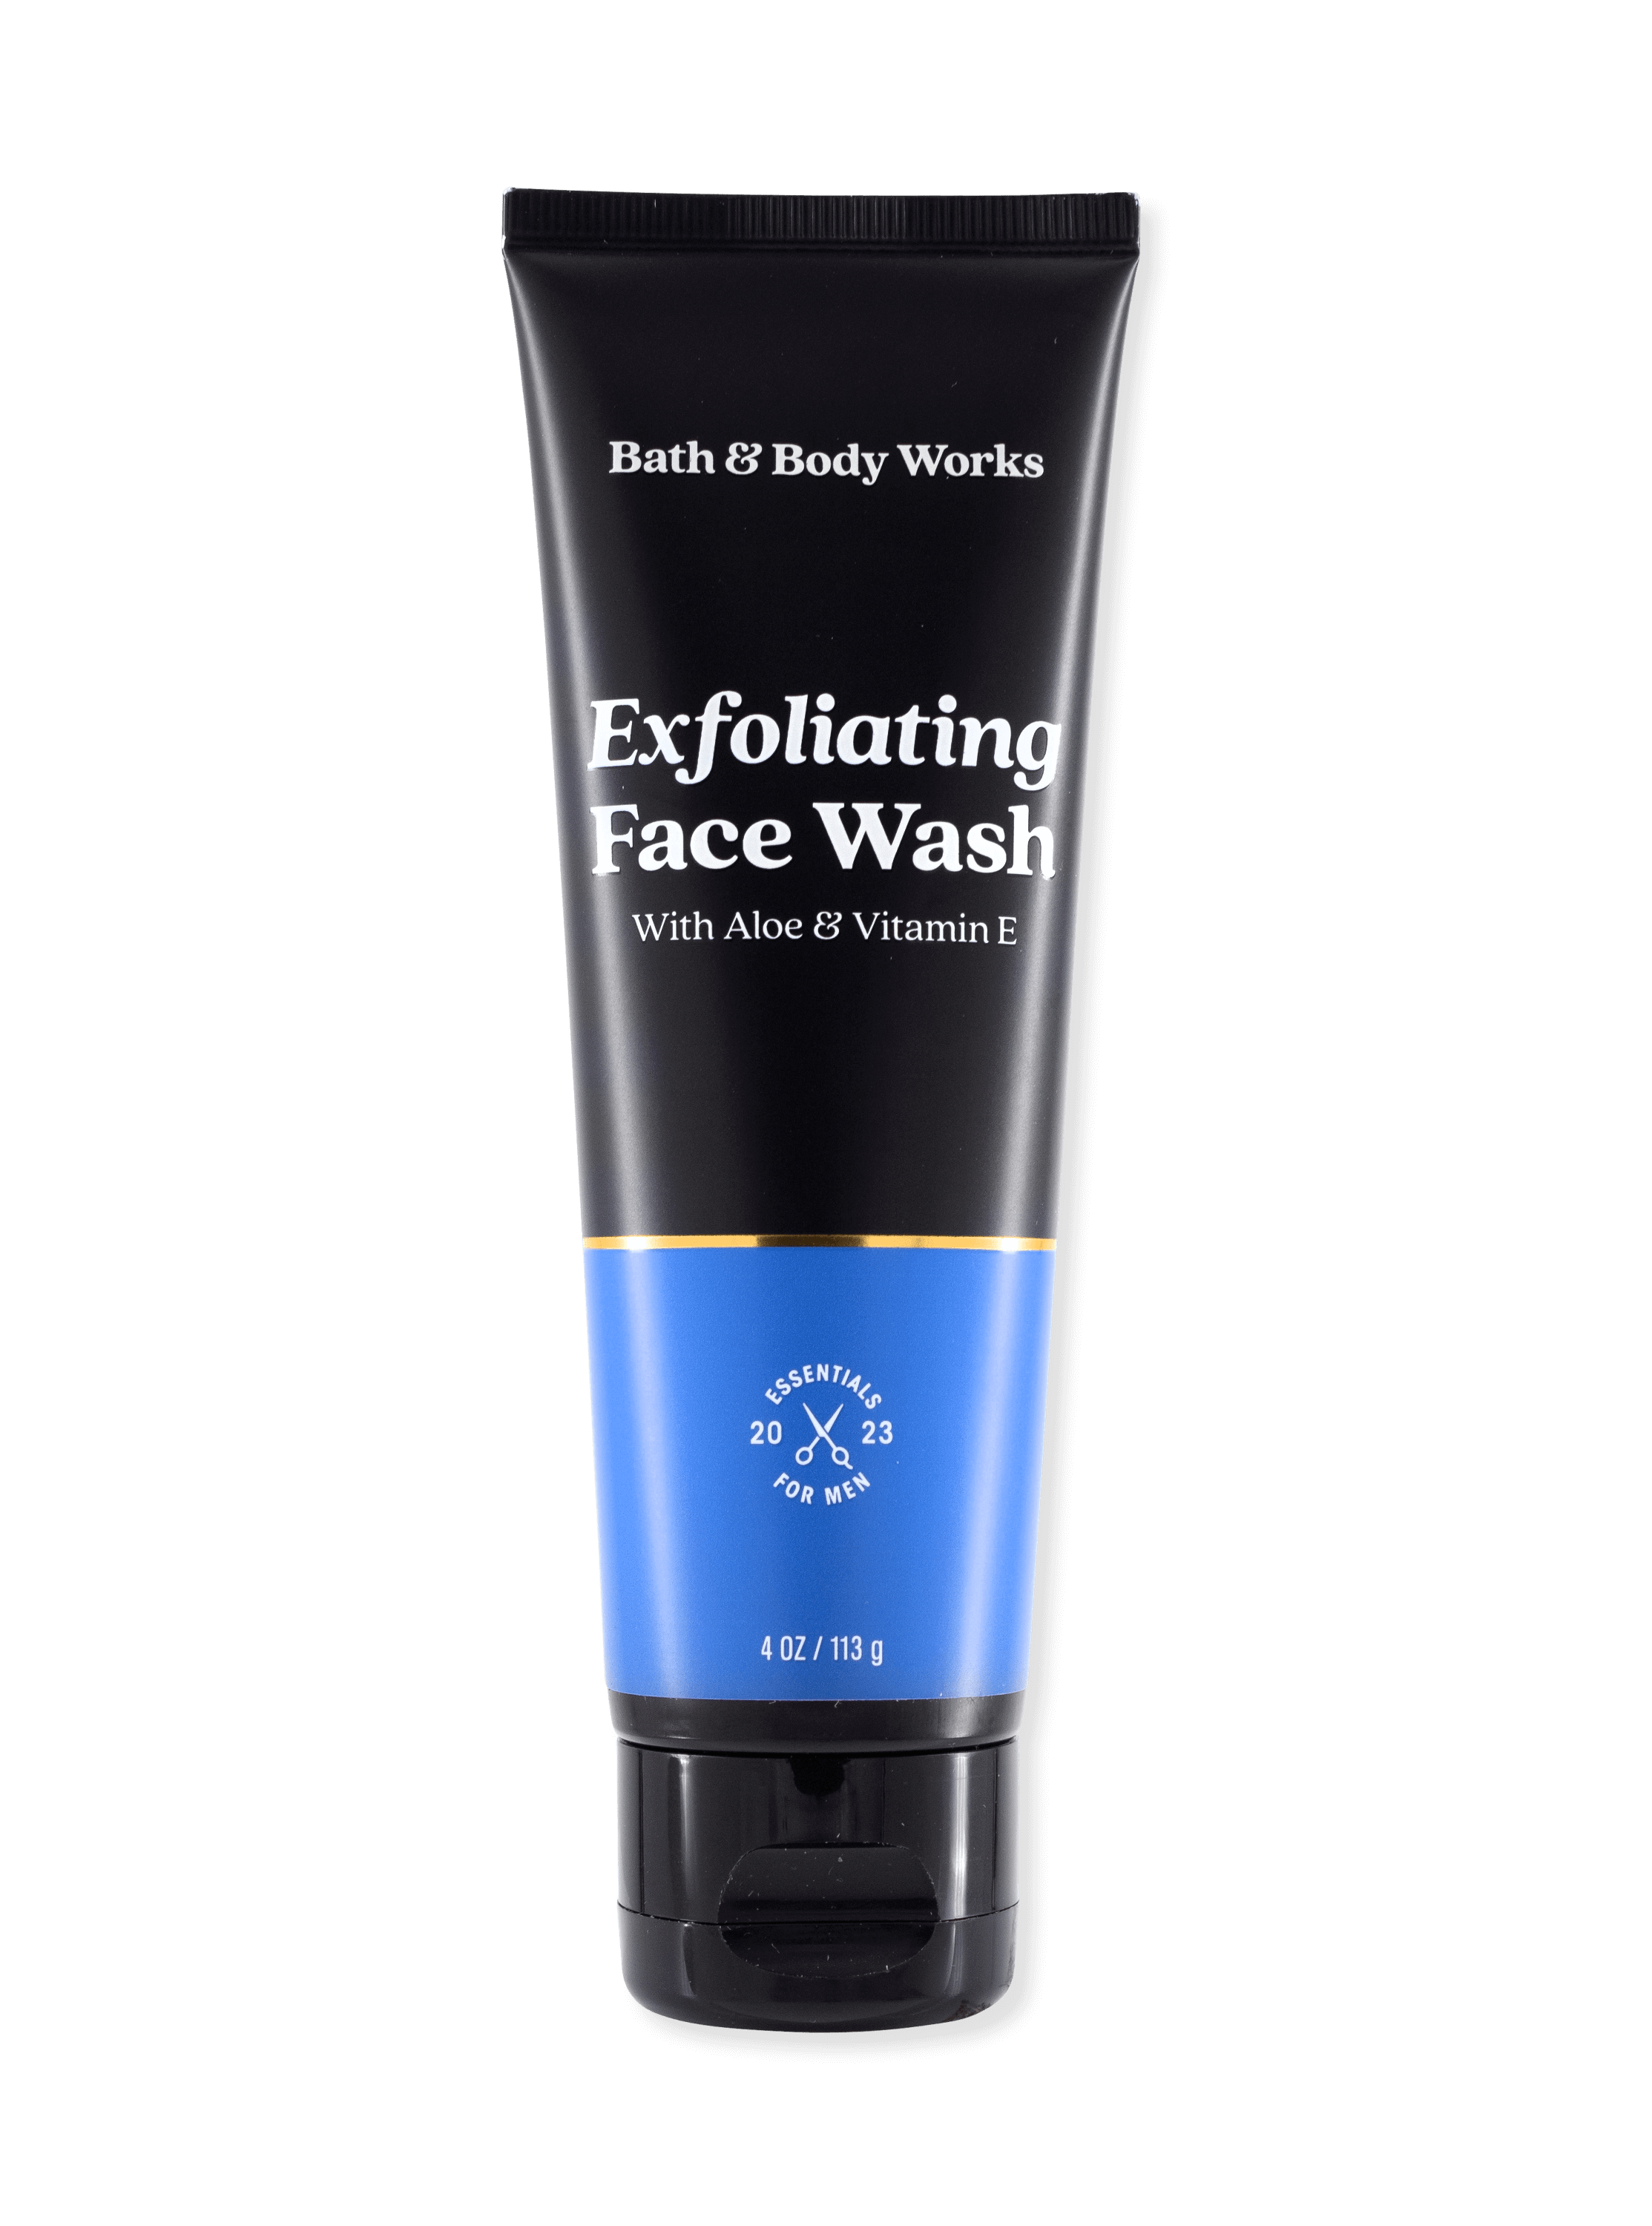 Exfoliating Face Wash with Aloe & Vitamin E - For Men  - 113g